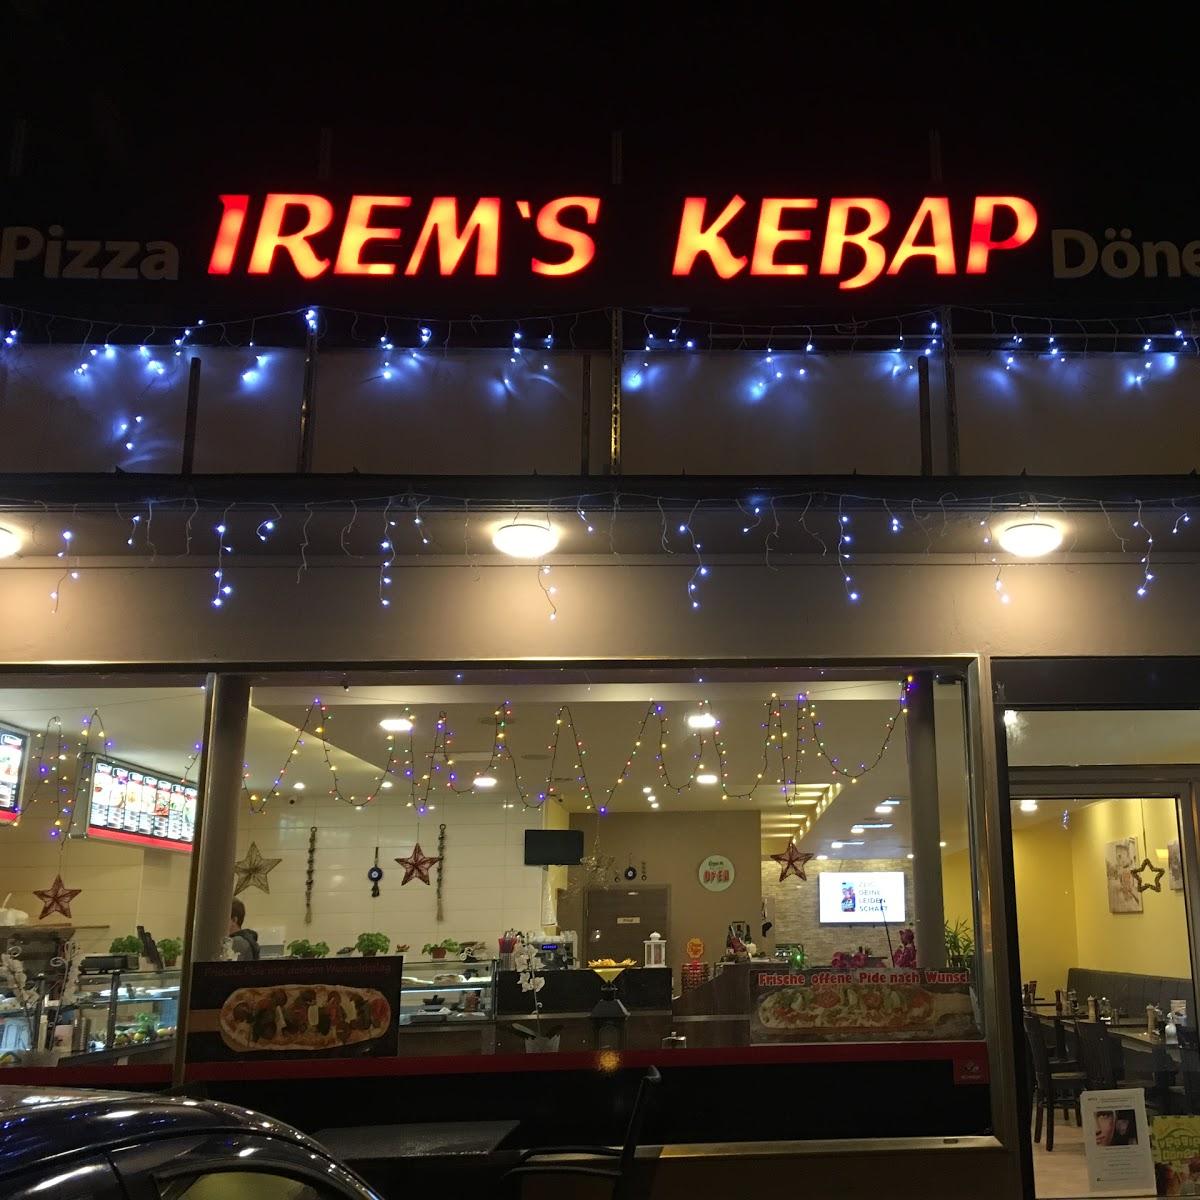 Restaurant "Irem